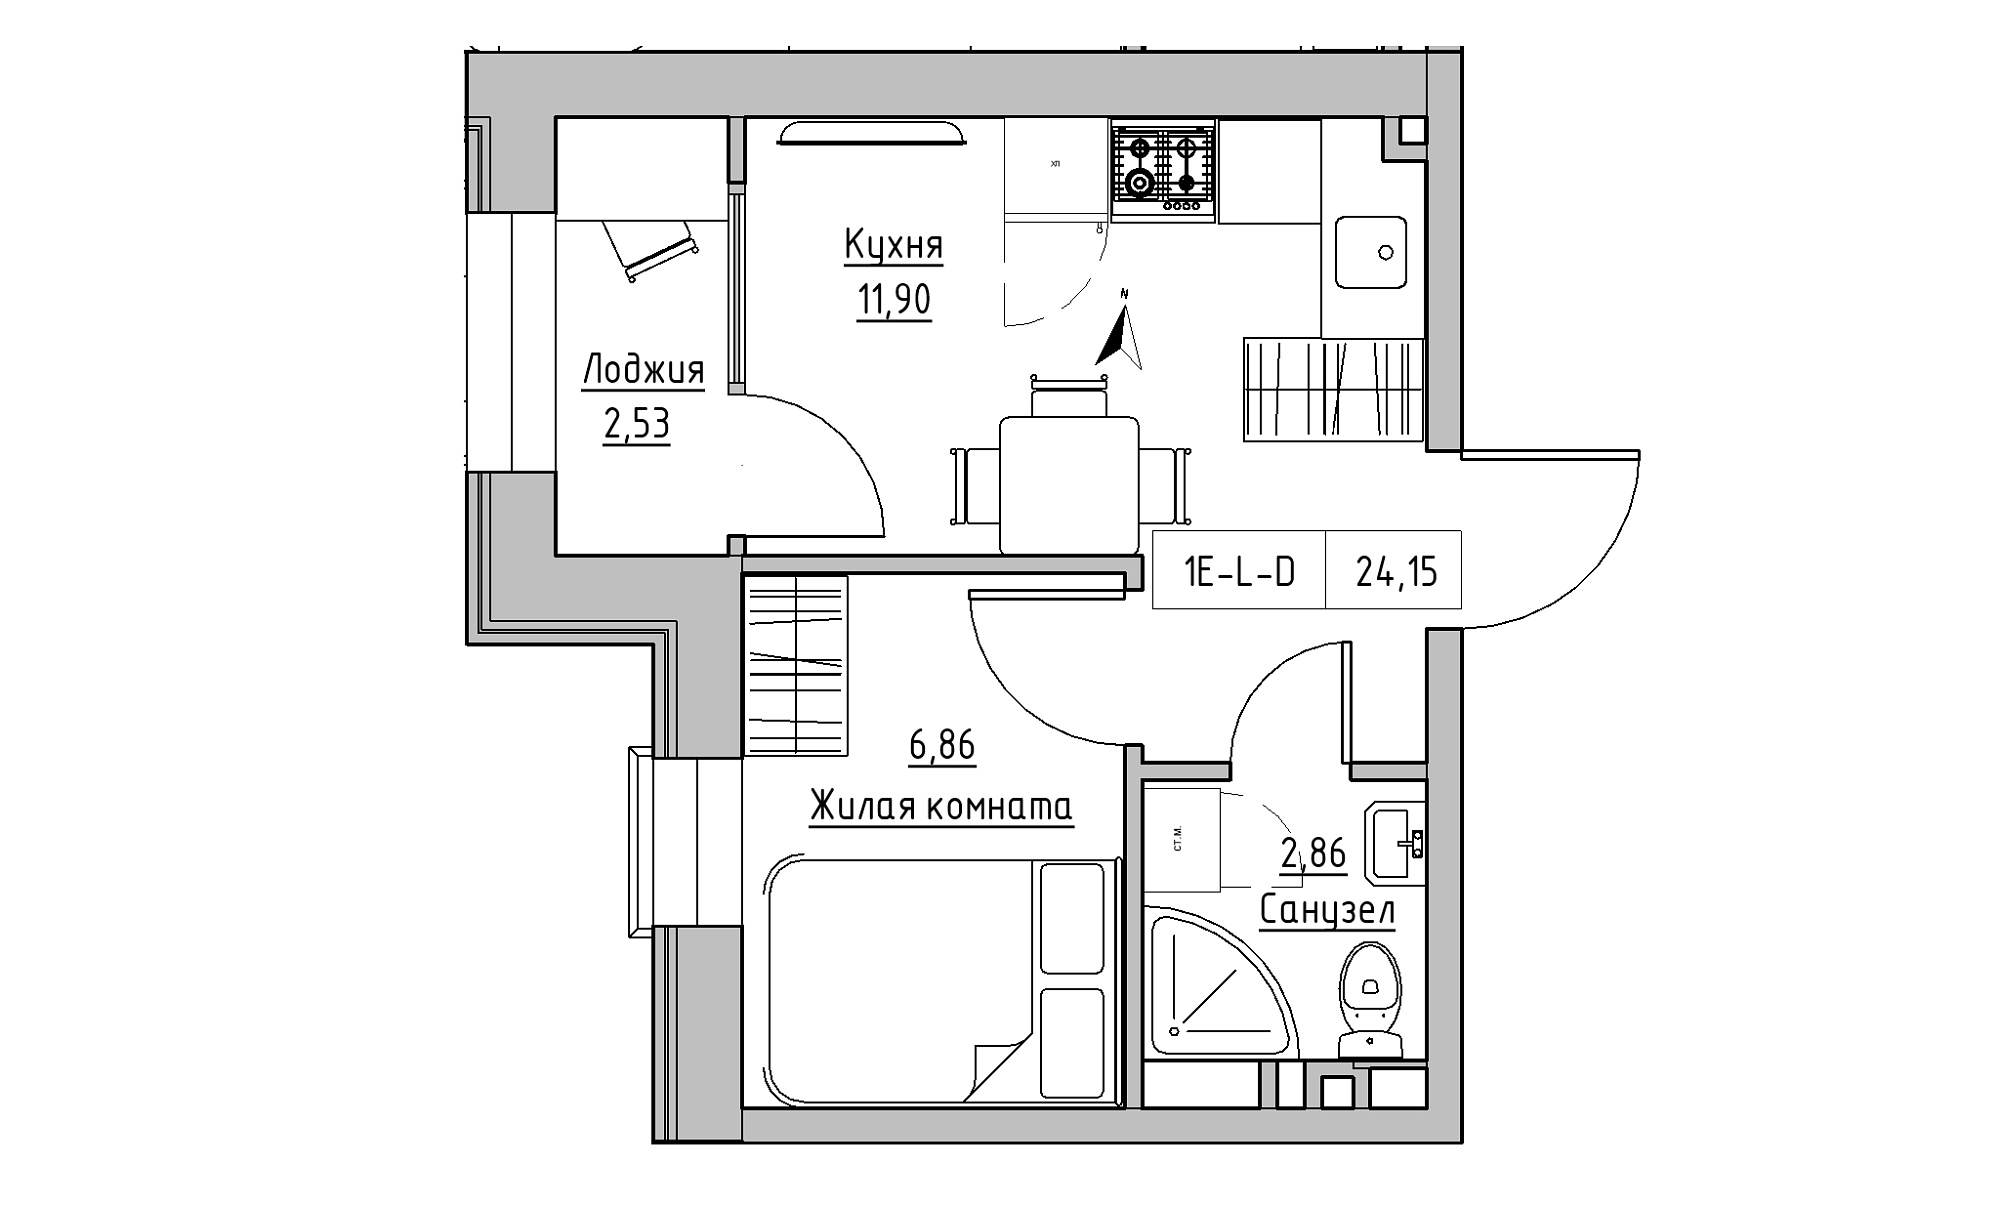 Planning 1-rm flats area 24.15m2, KS-023-02/0001.